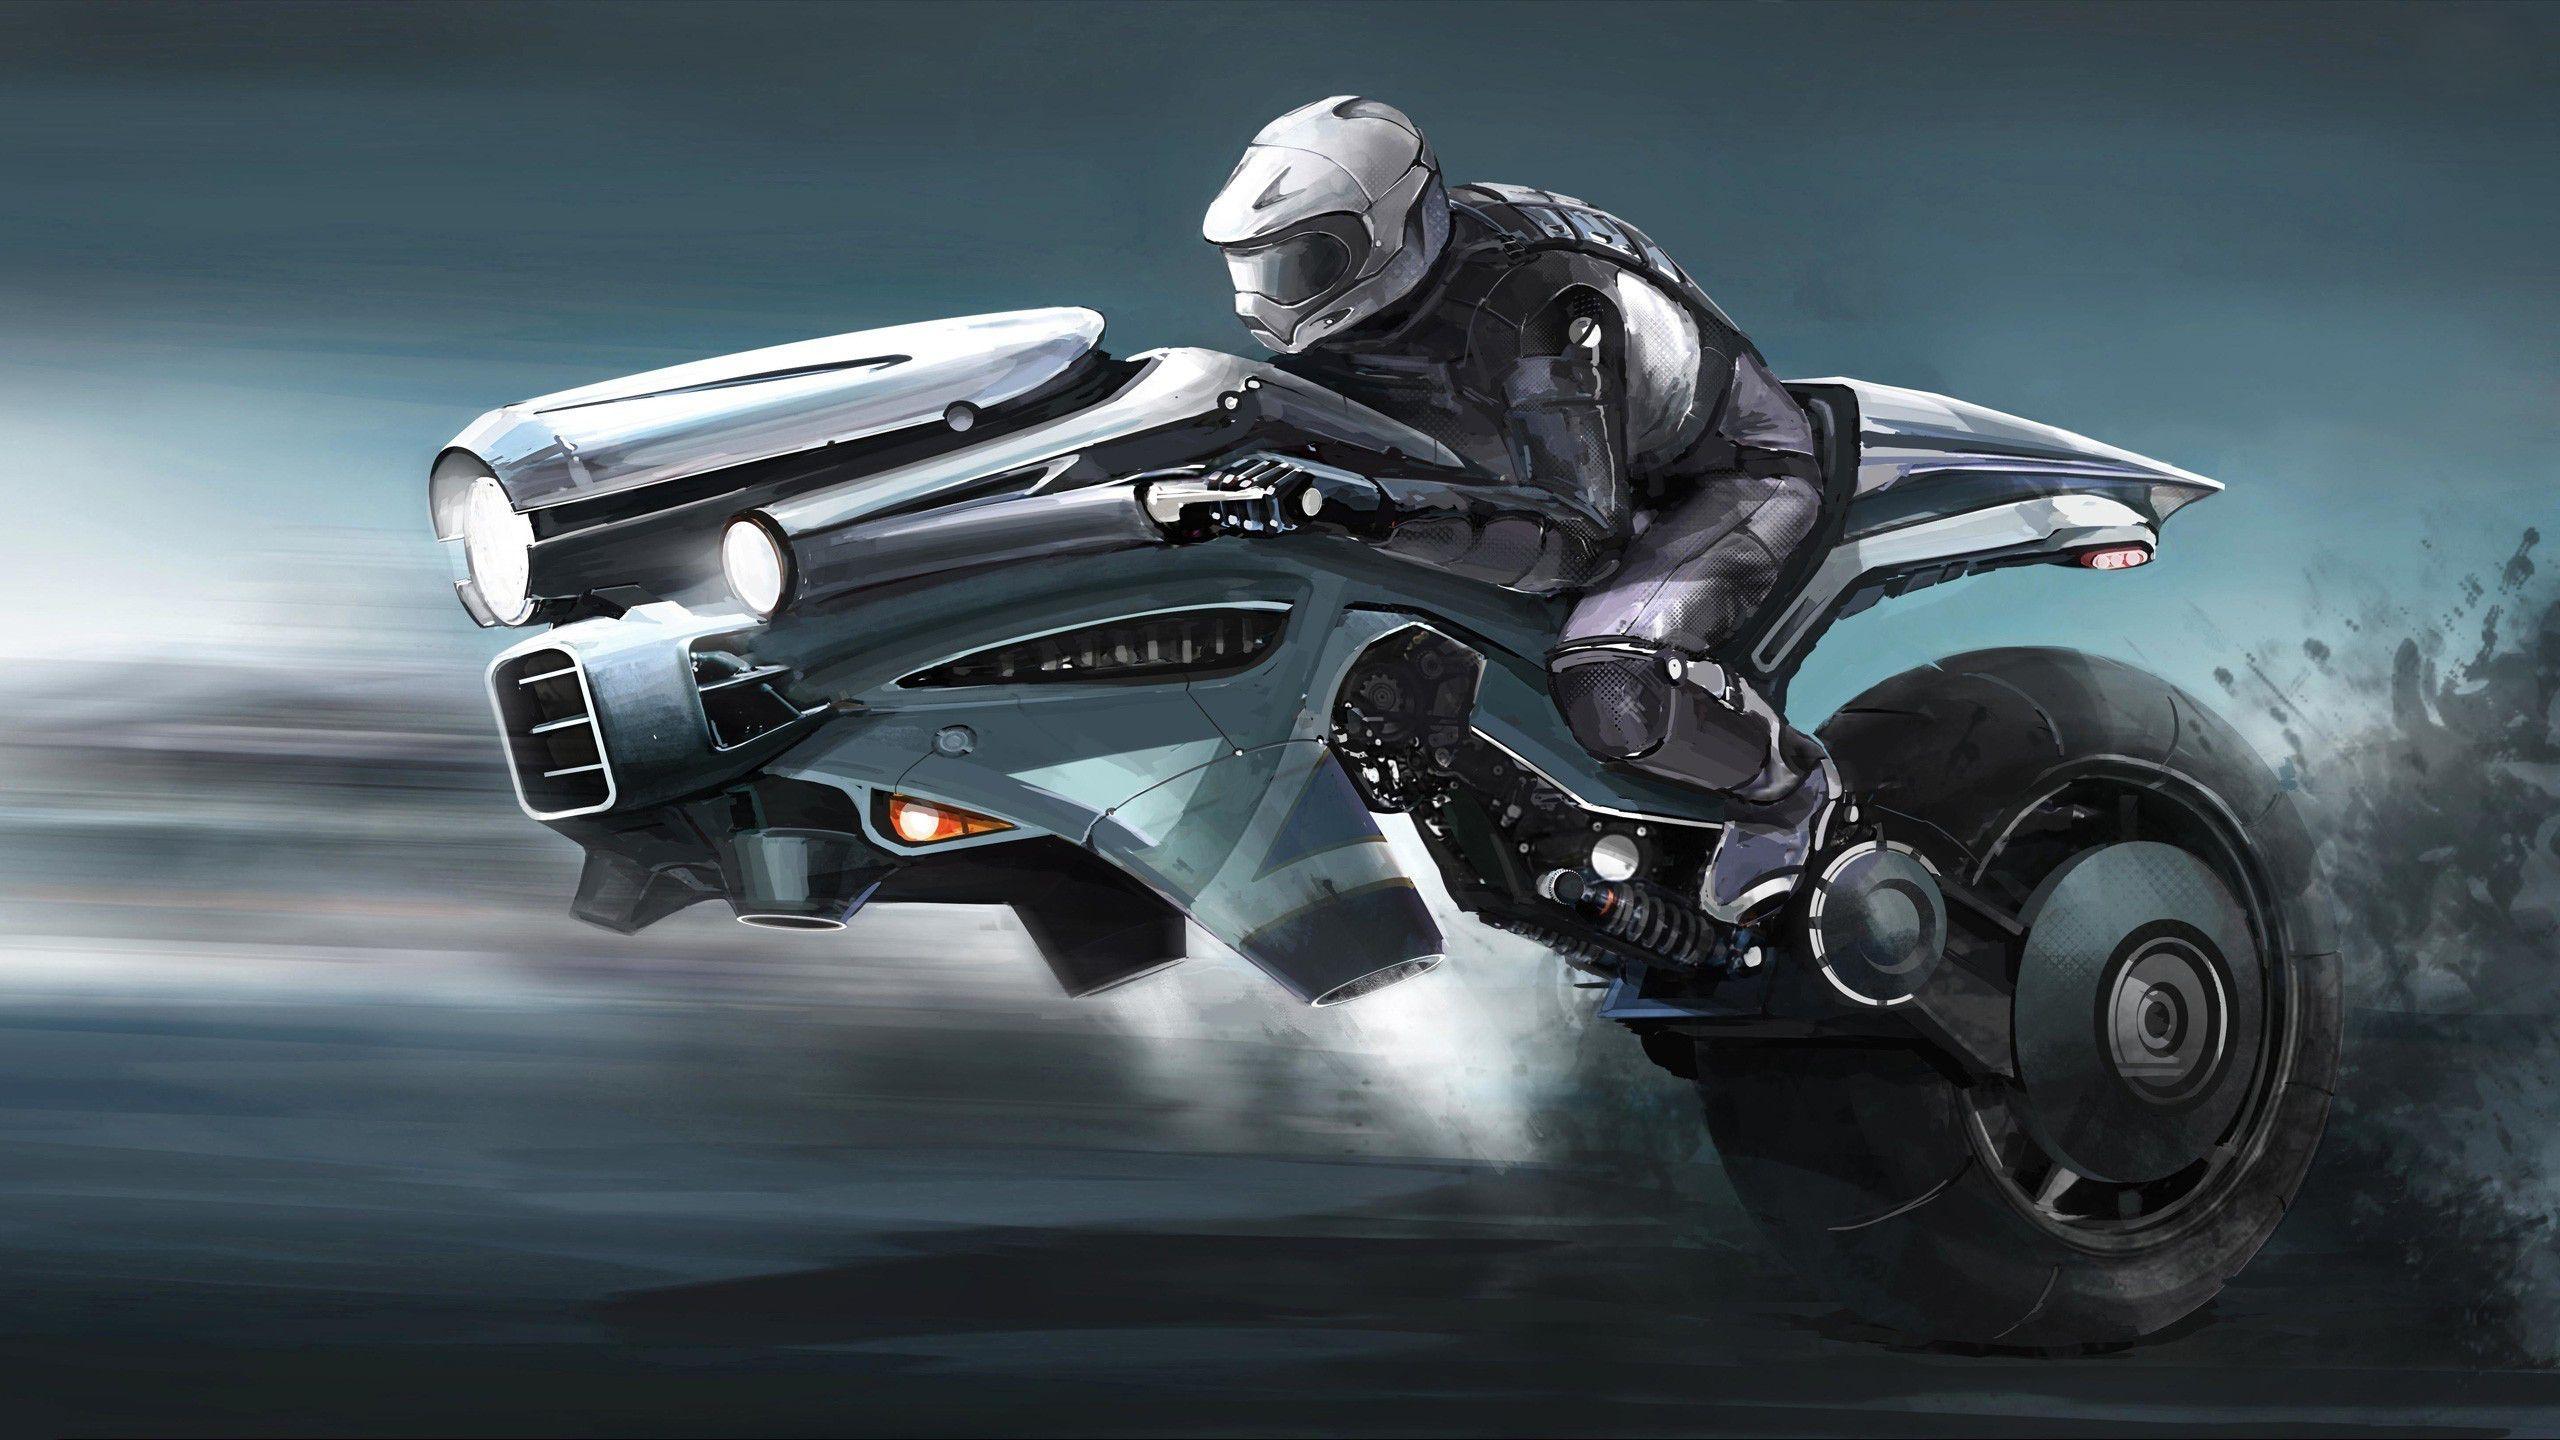 Sci Fi Motorcycle Wallpaper Free Sci Fi Motorcycle